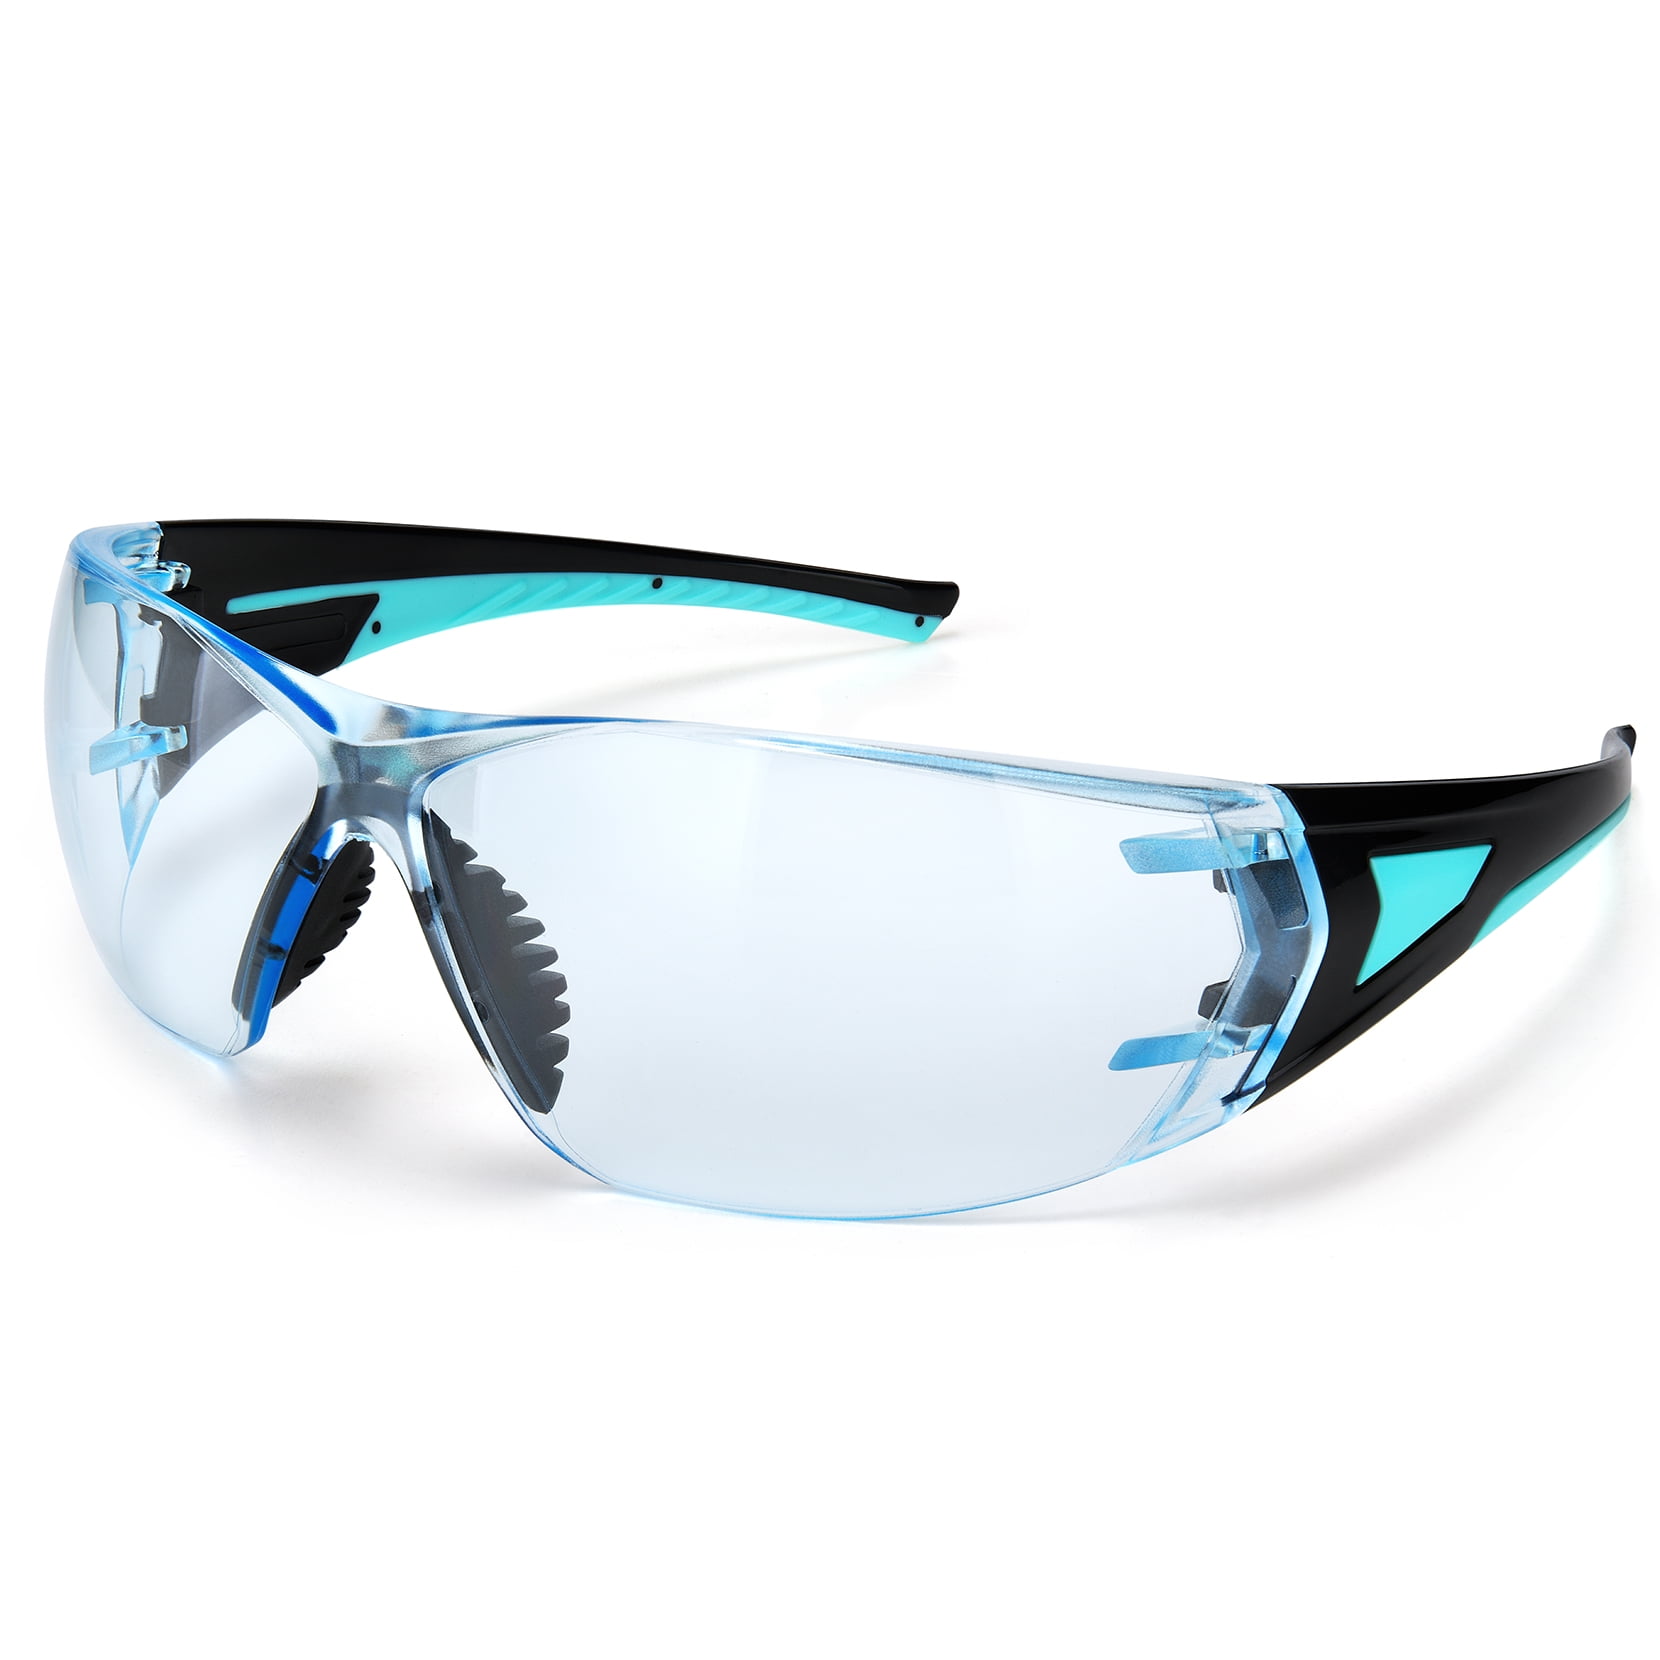 UV Wraps Safety Goggles